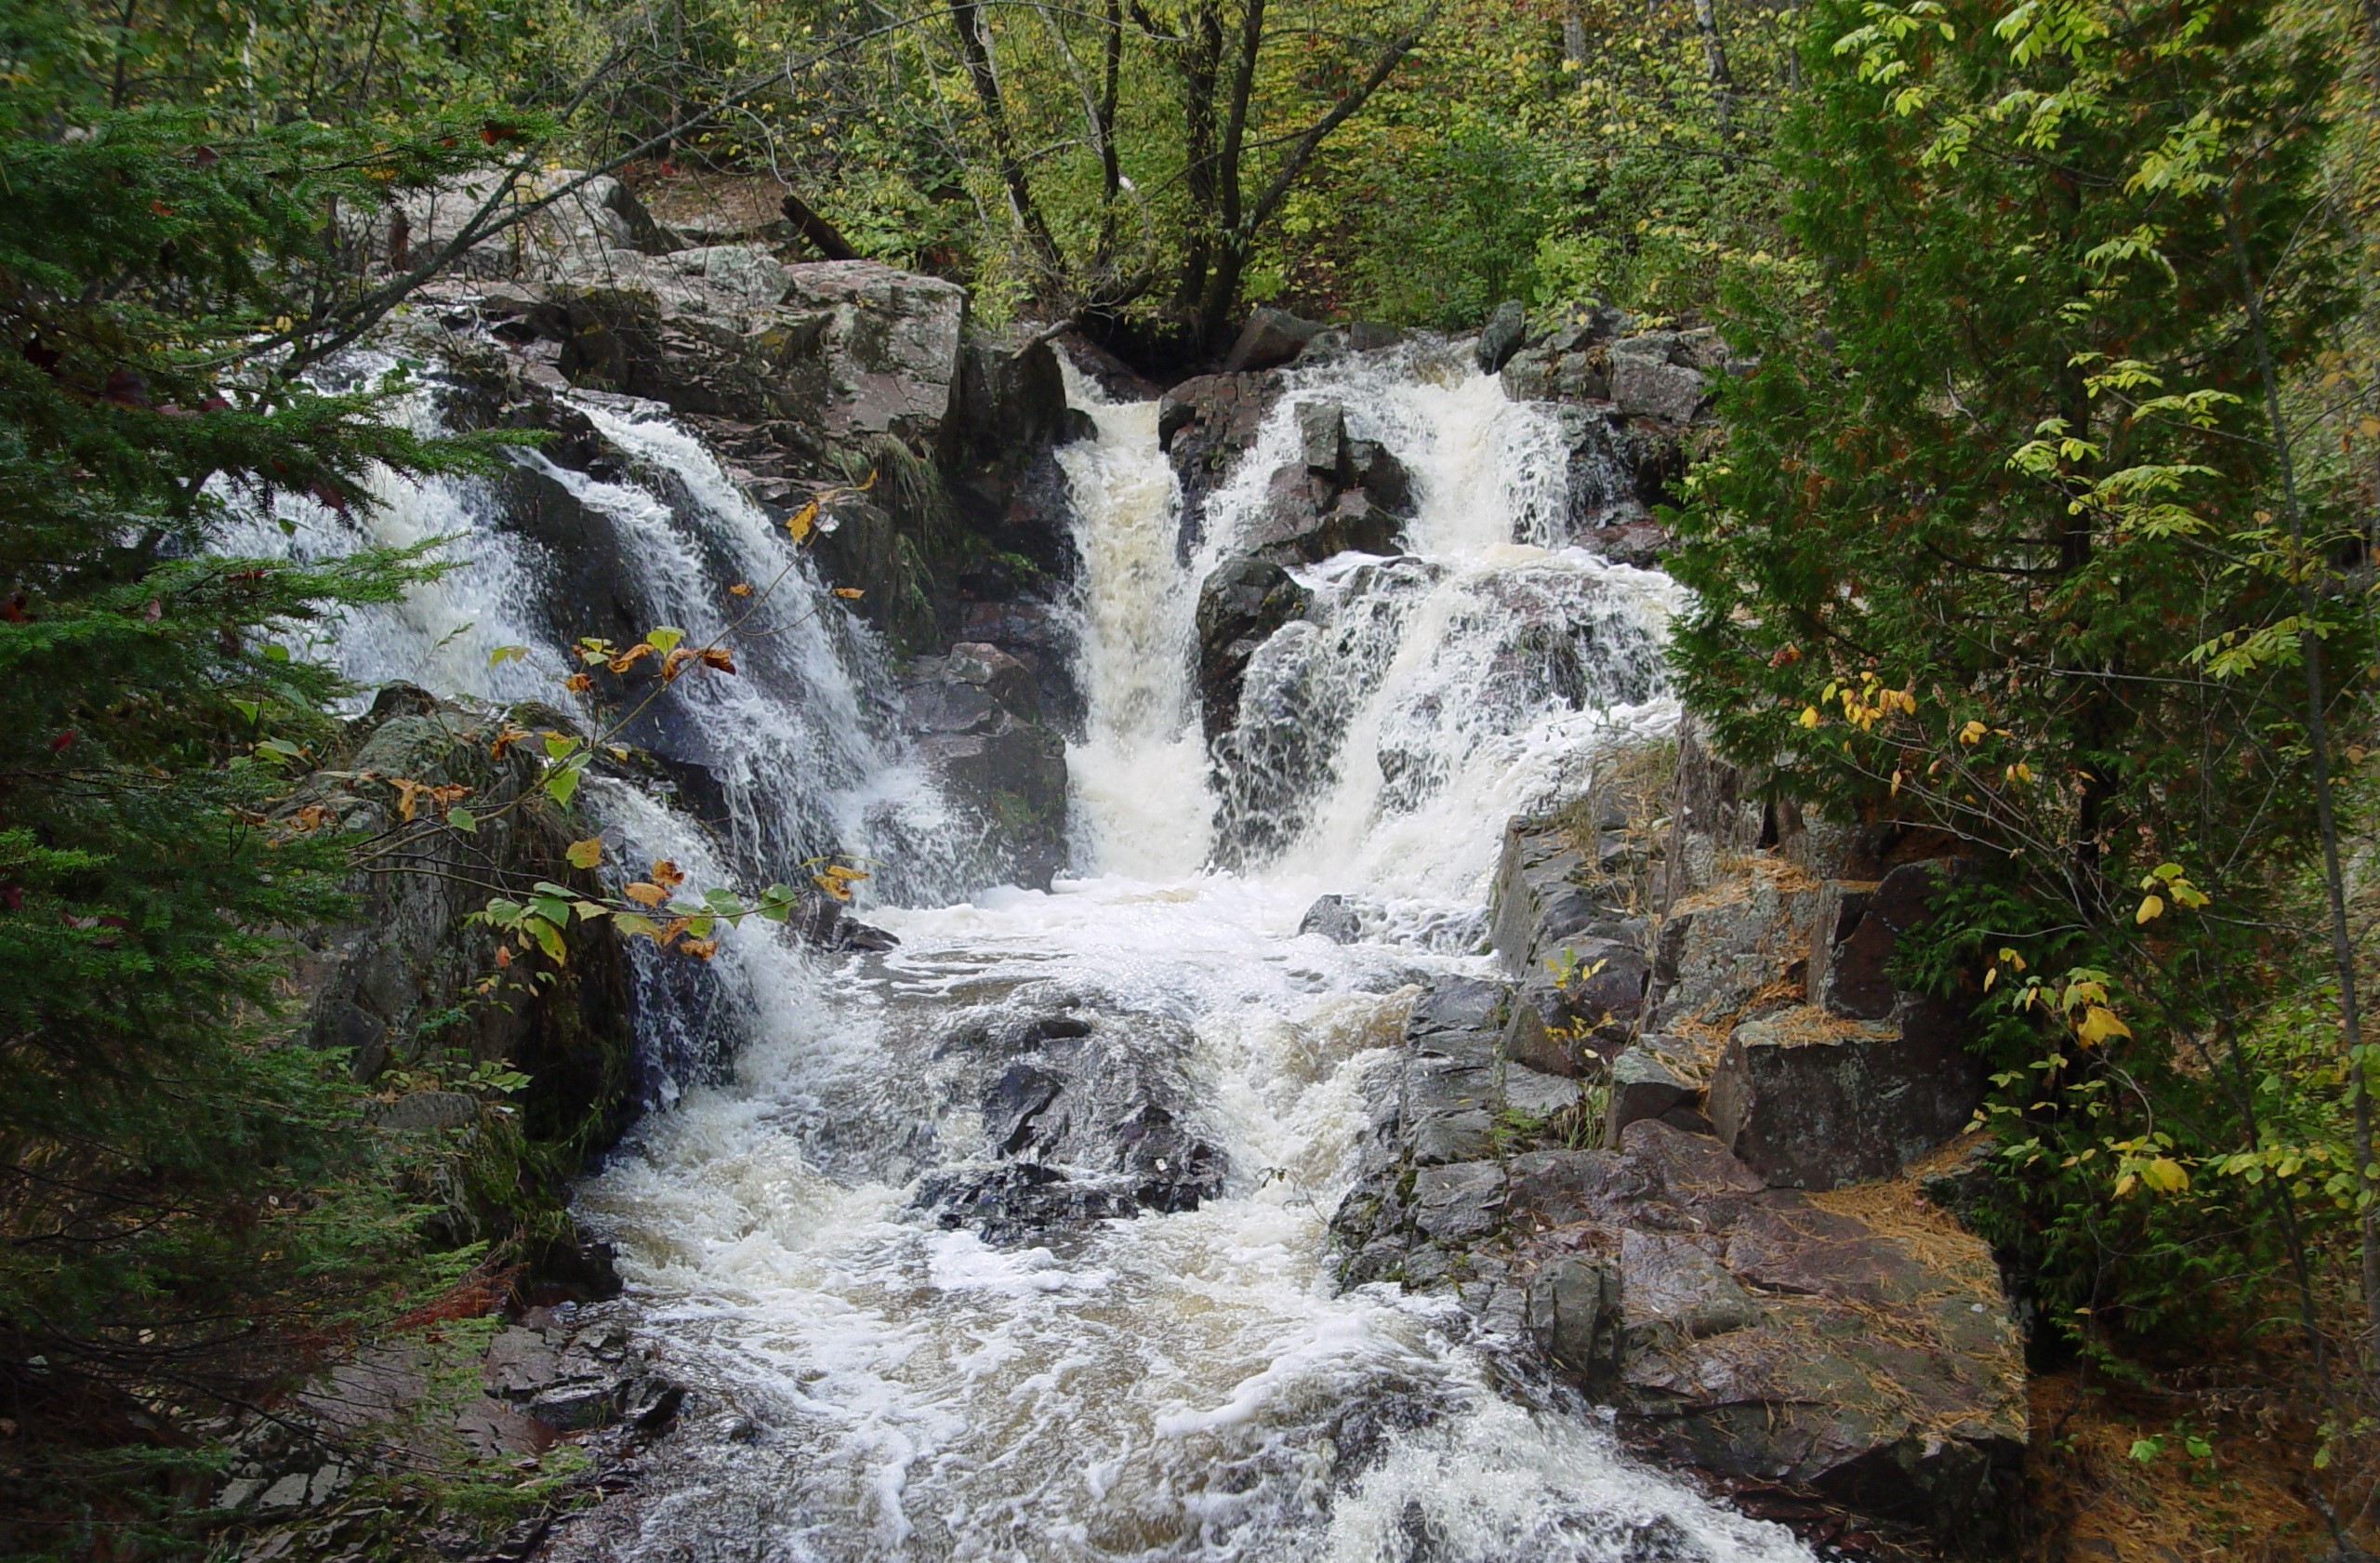 Tischer Creek running with small waterfalls over large exposed bedrock